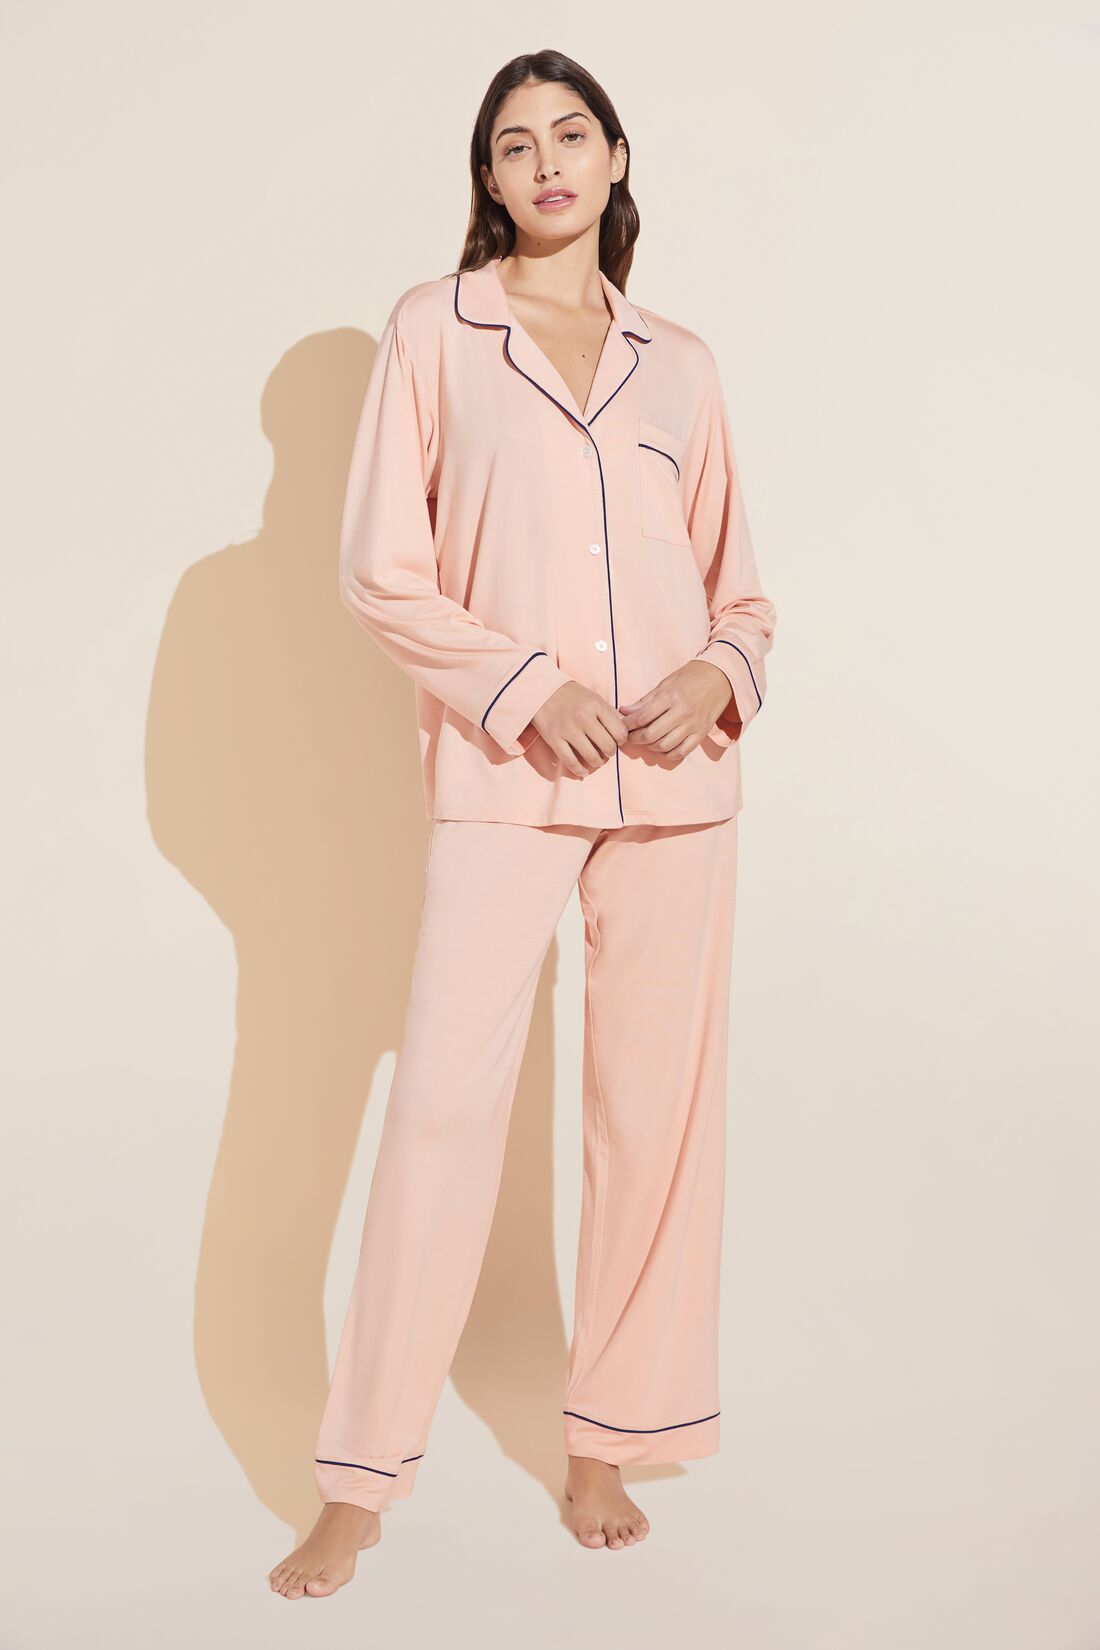 Eberjey's The Love Edit Has Pajama Sets, Robes, and Sleepshirts